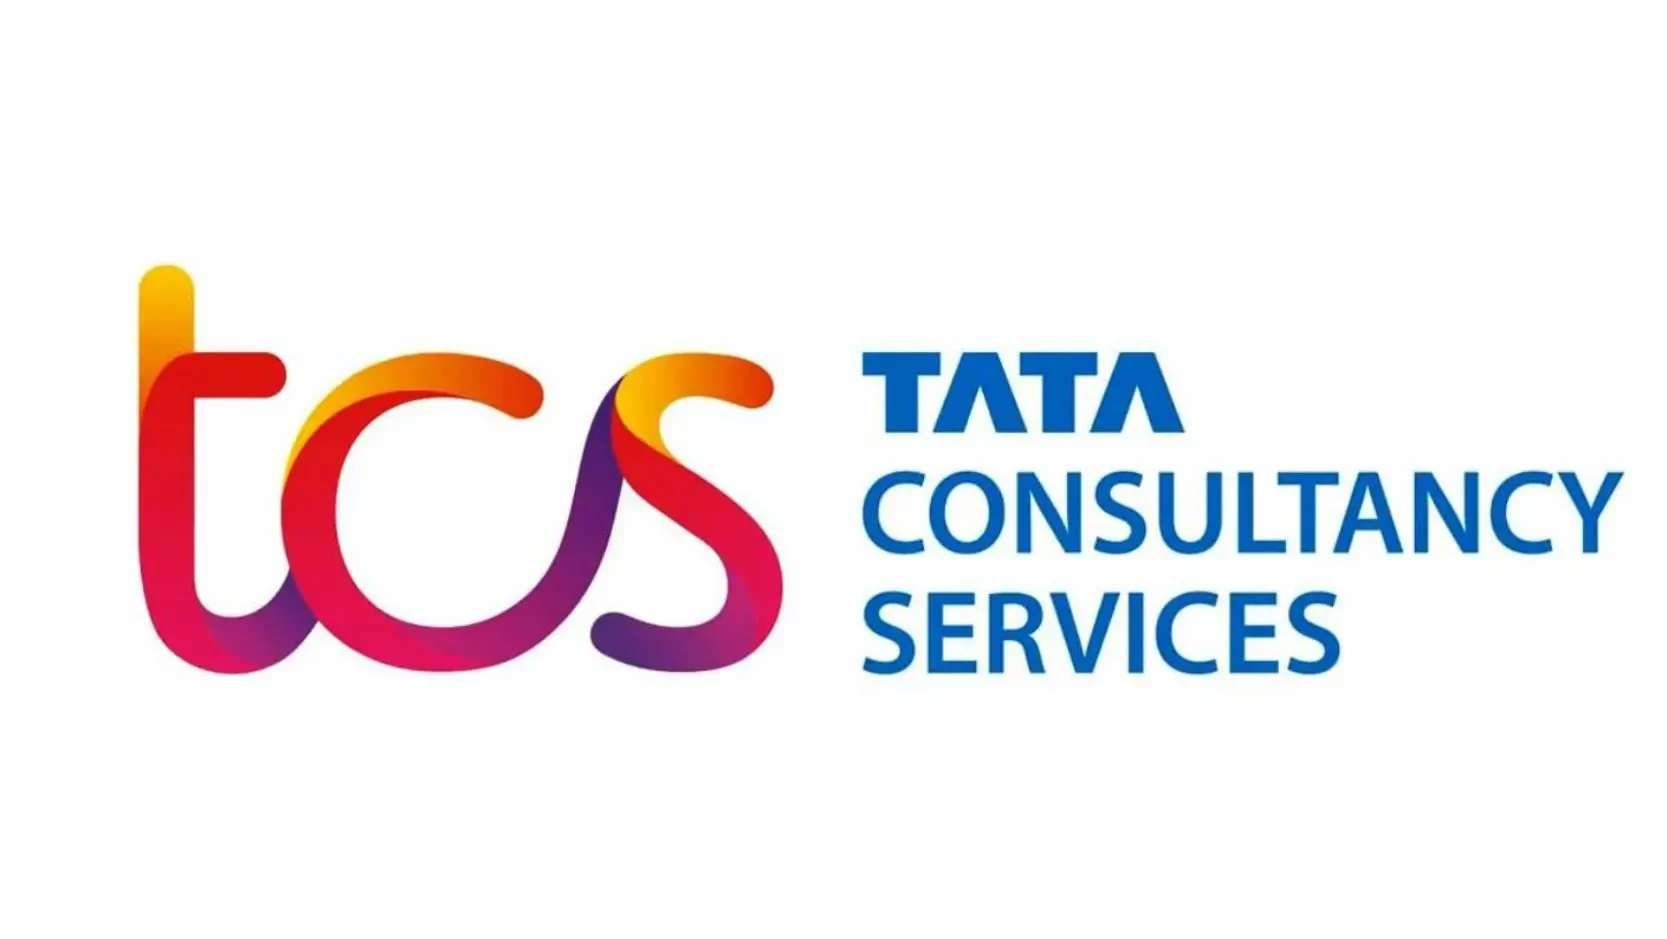 TCS Interim Dividend